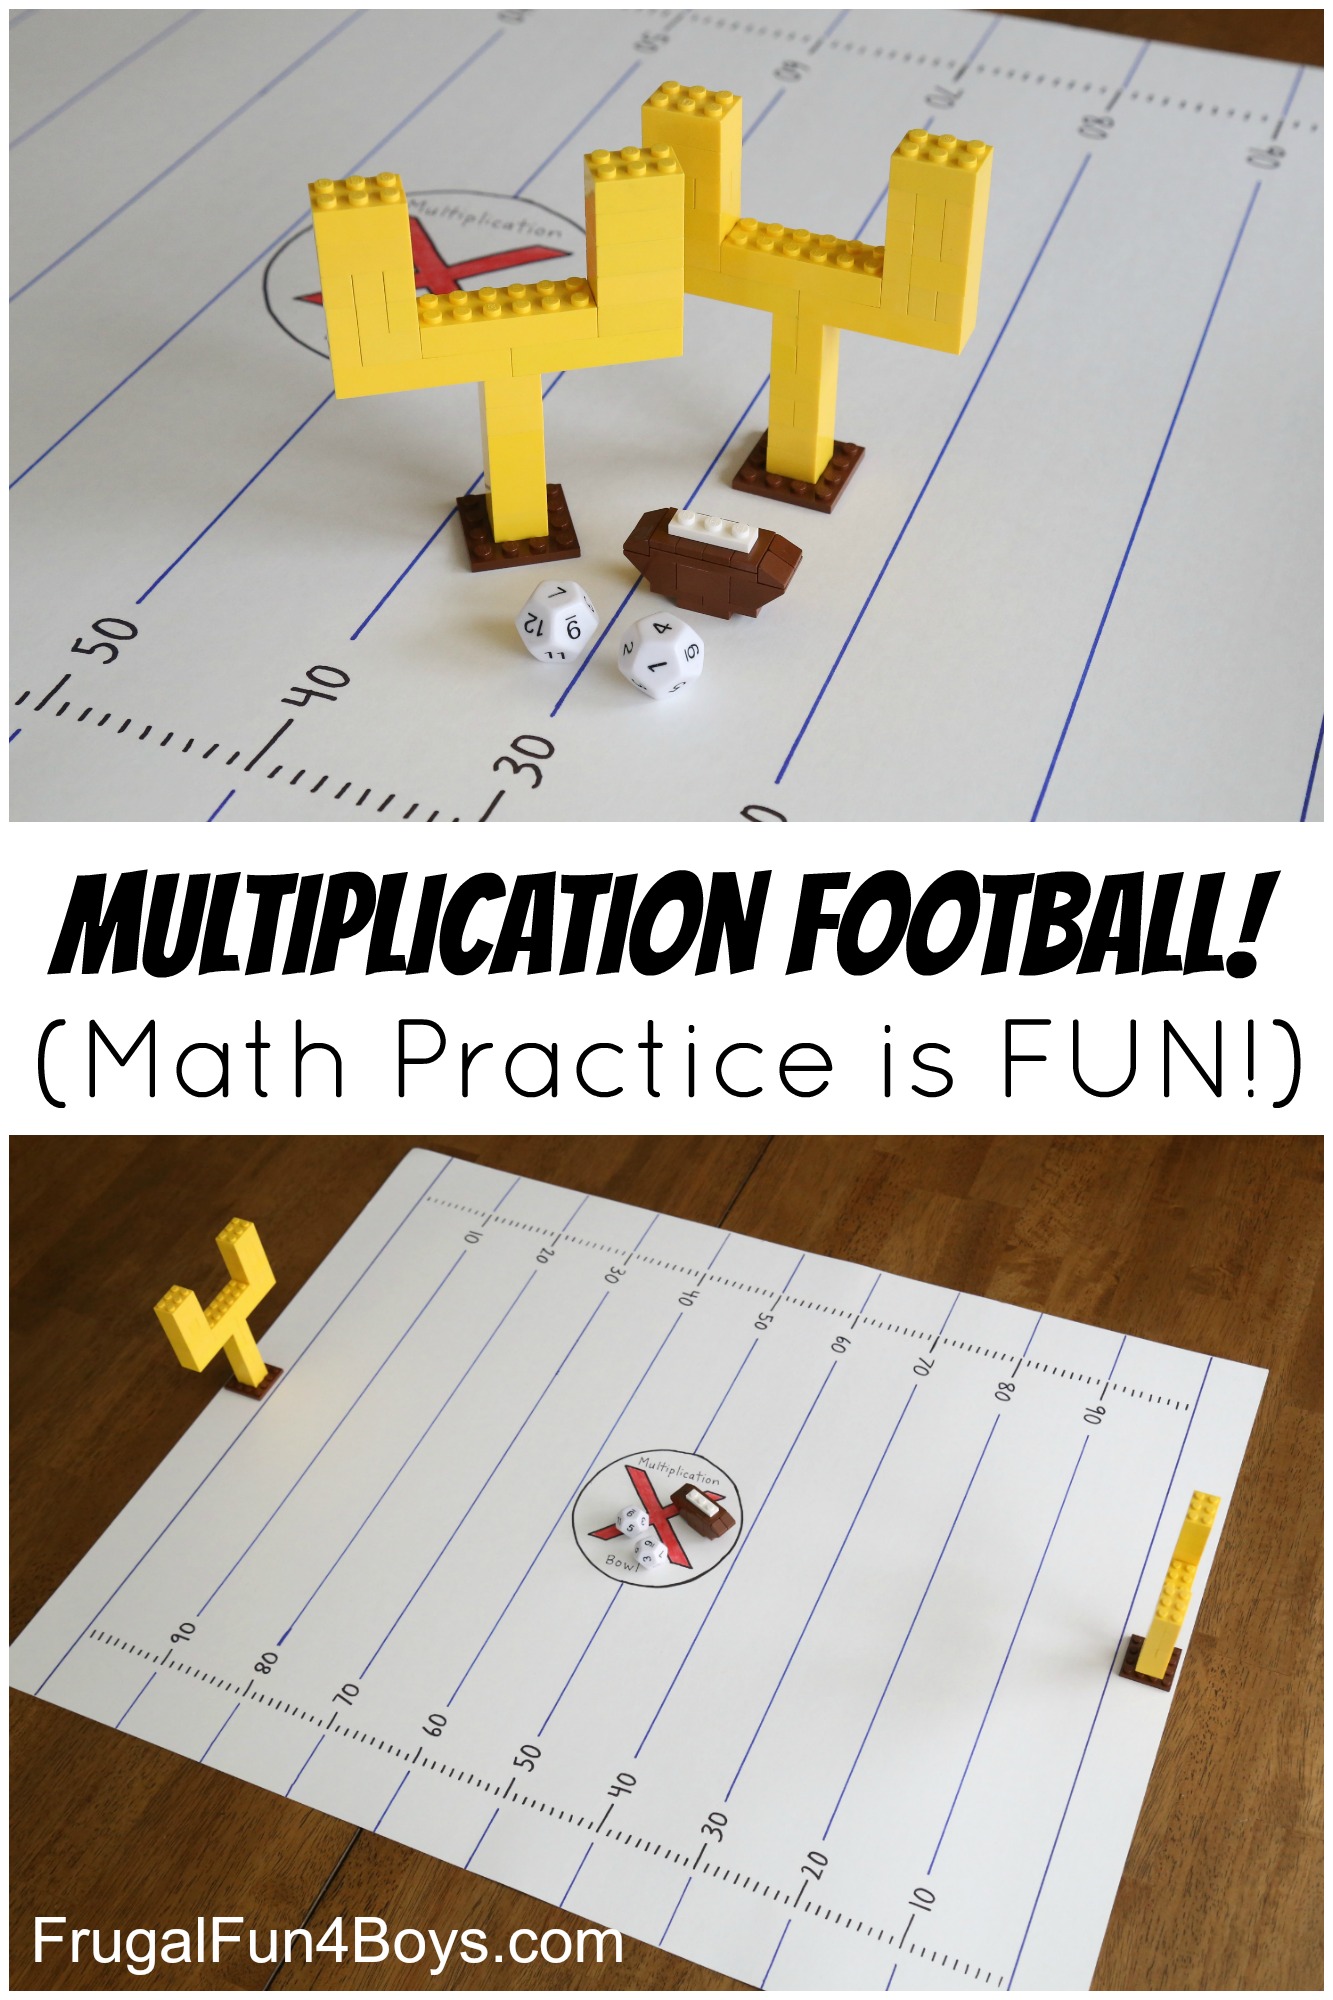 Multiplication Football Game - Make Math Practice Fun!